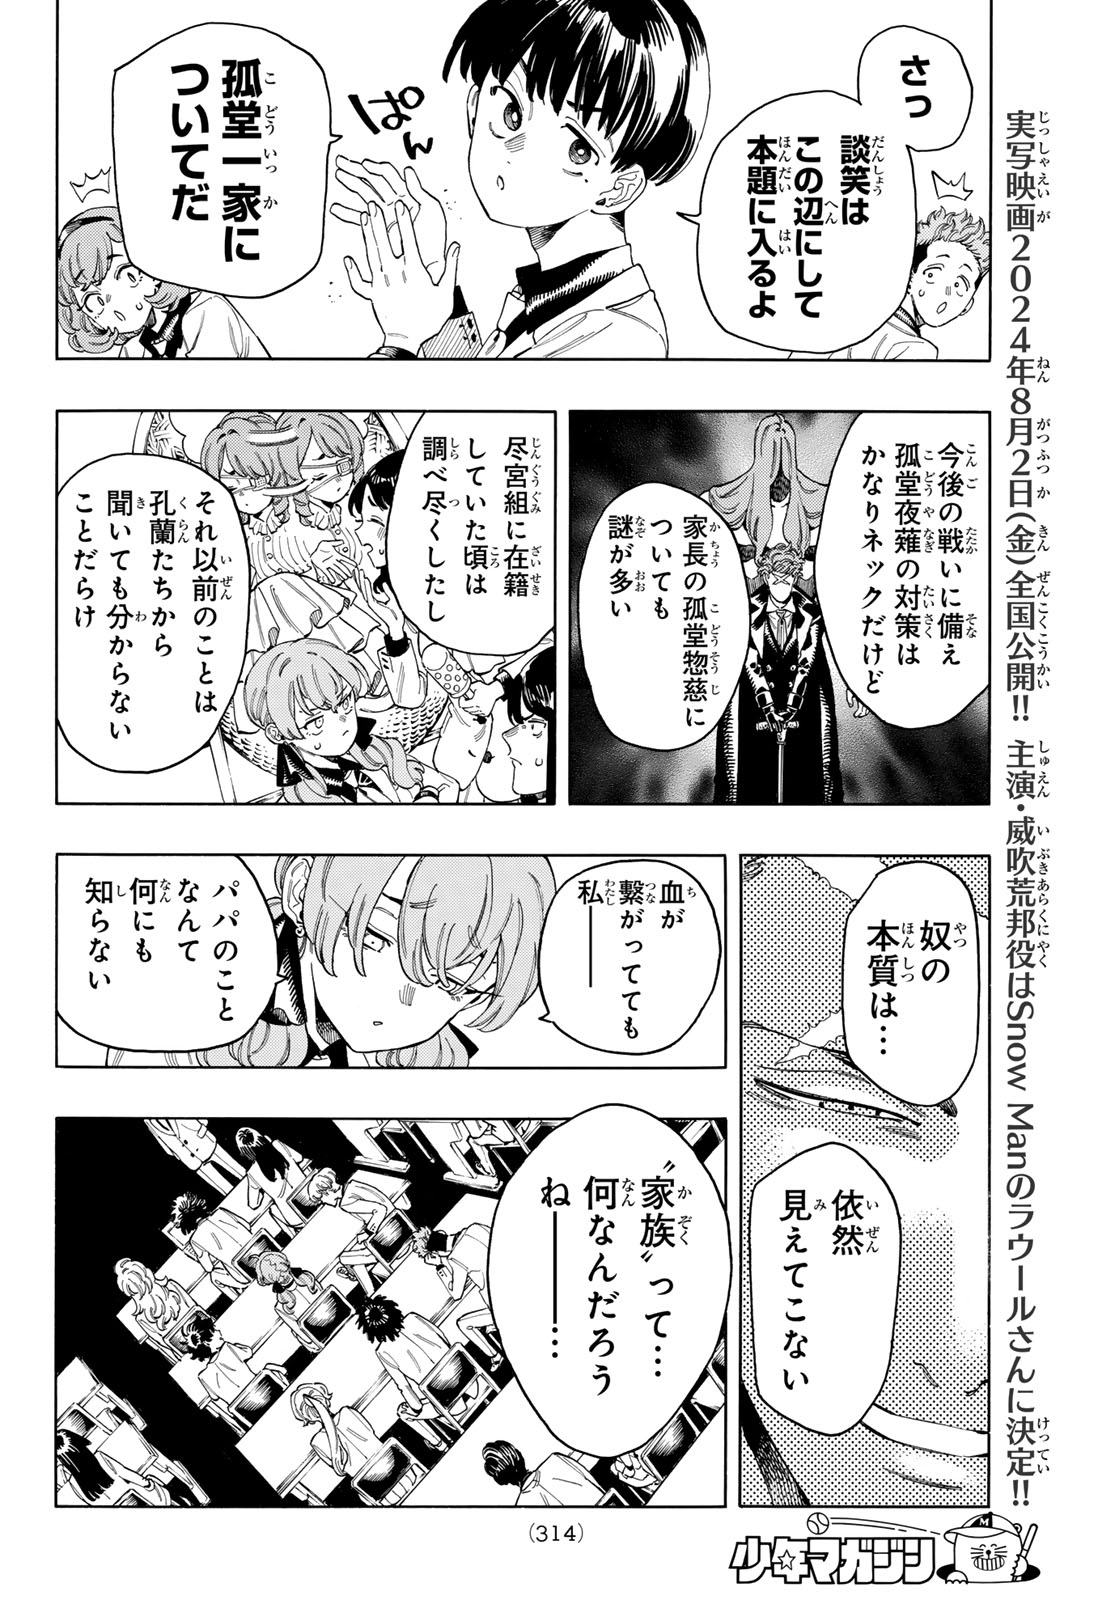 Akabane Honeko no Bodyguard - Chapter 84 - Page 8